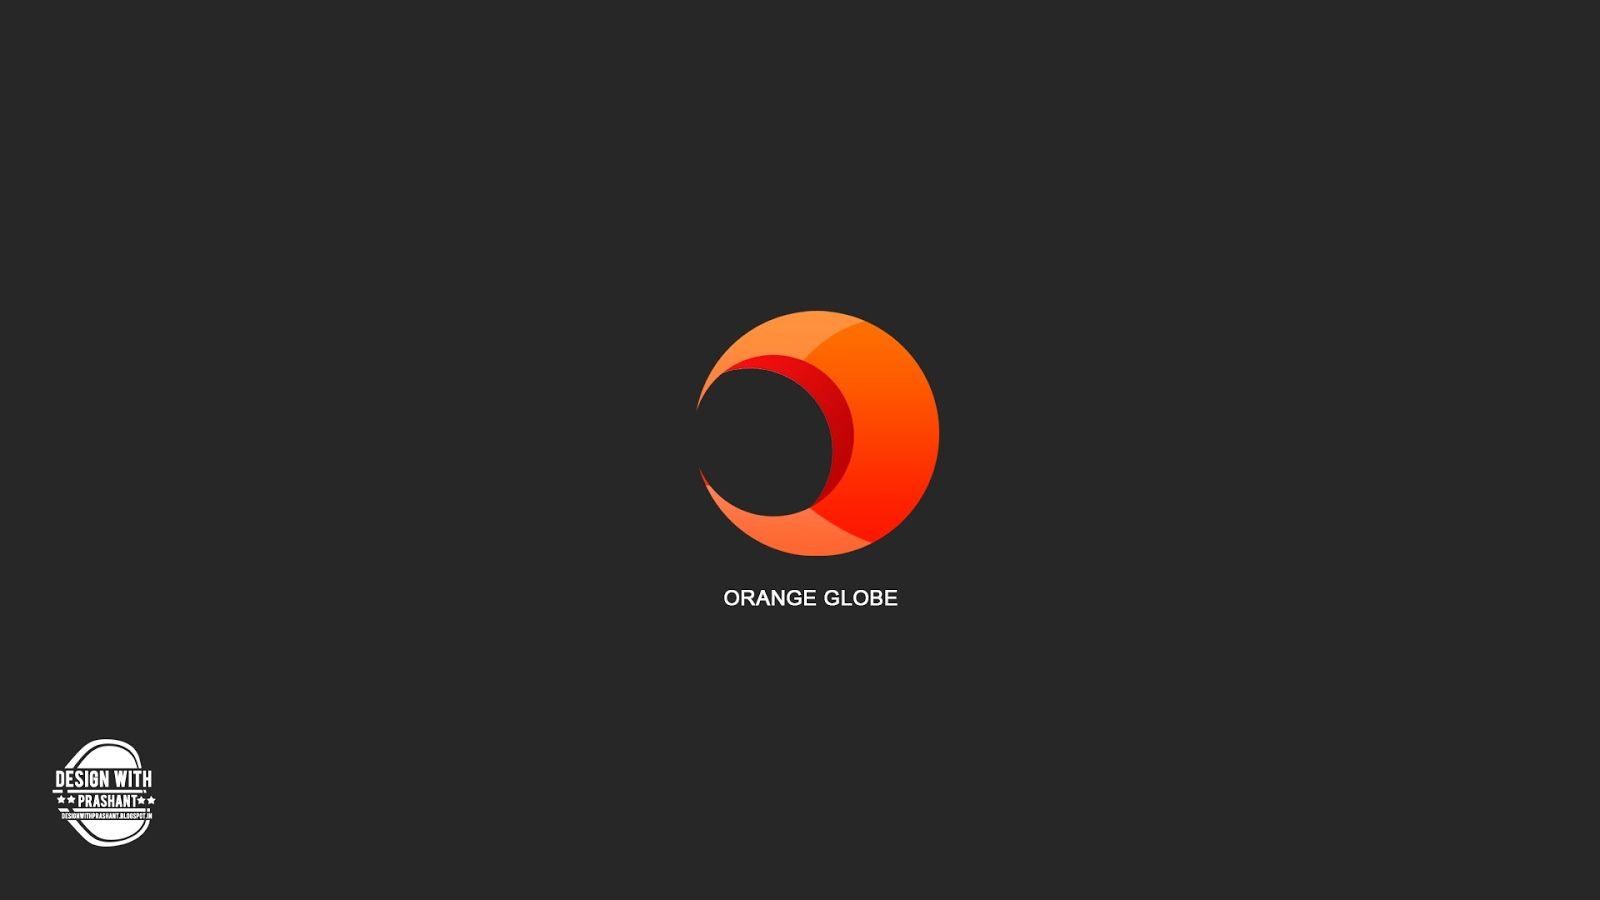 Orange Globe Logo - ORANGE GLOBE LOGO | DESIGN WITH PRASHANT - DESIGN WITH PRASHANT